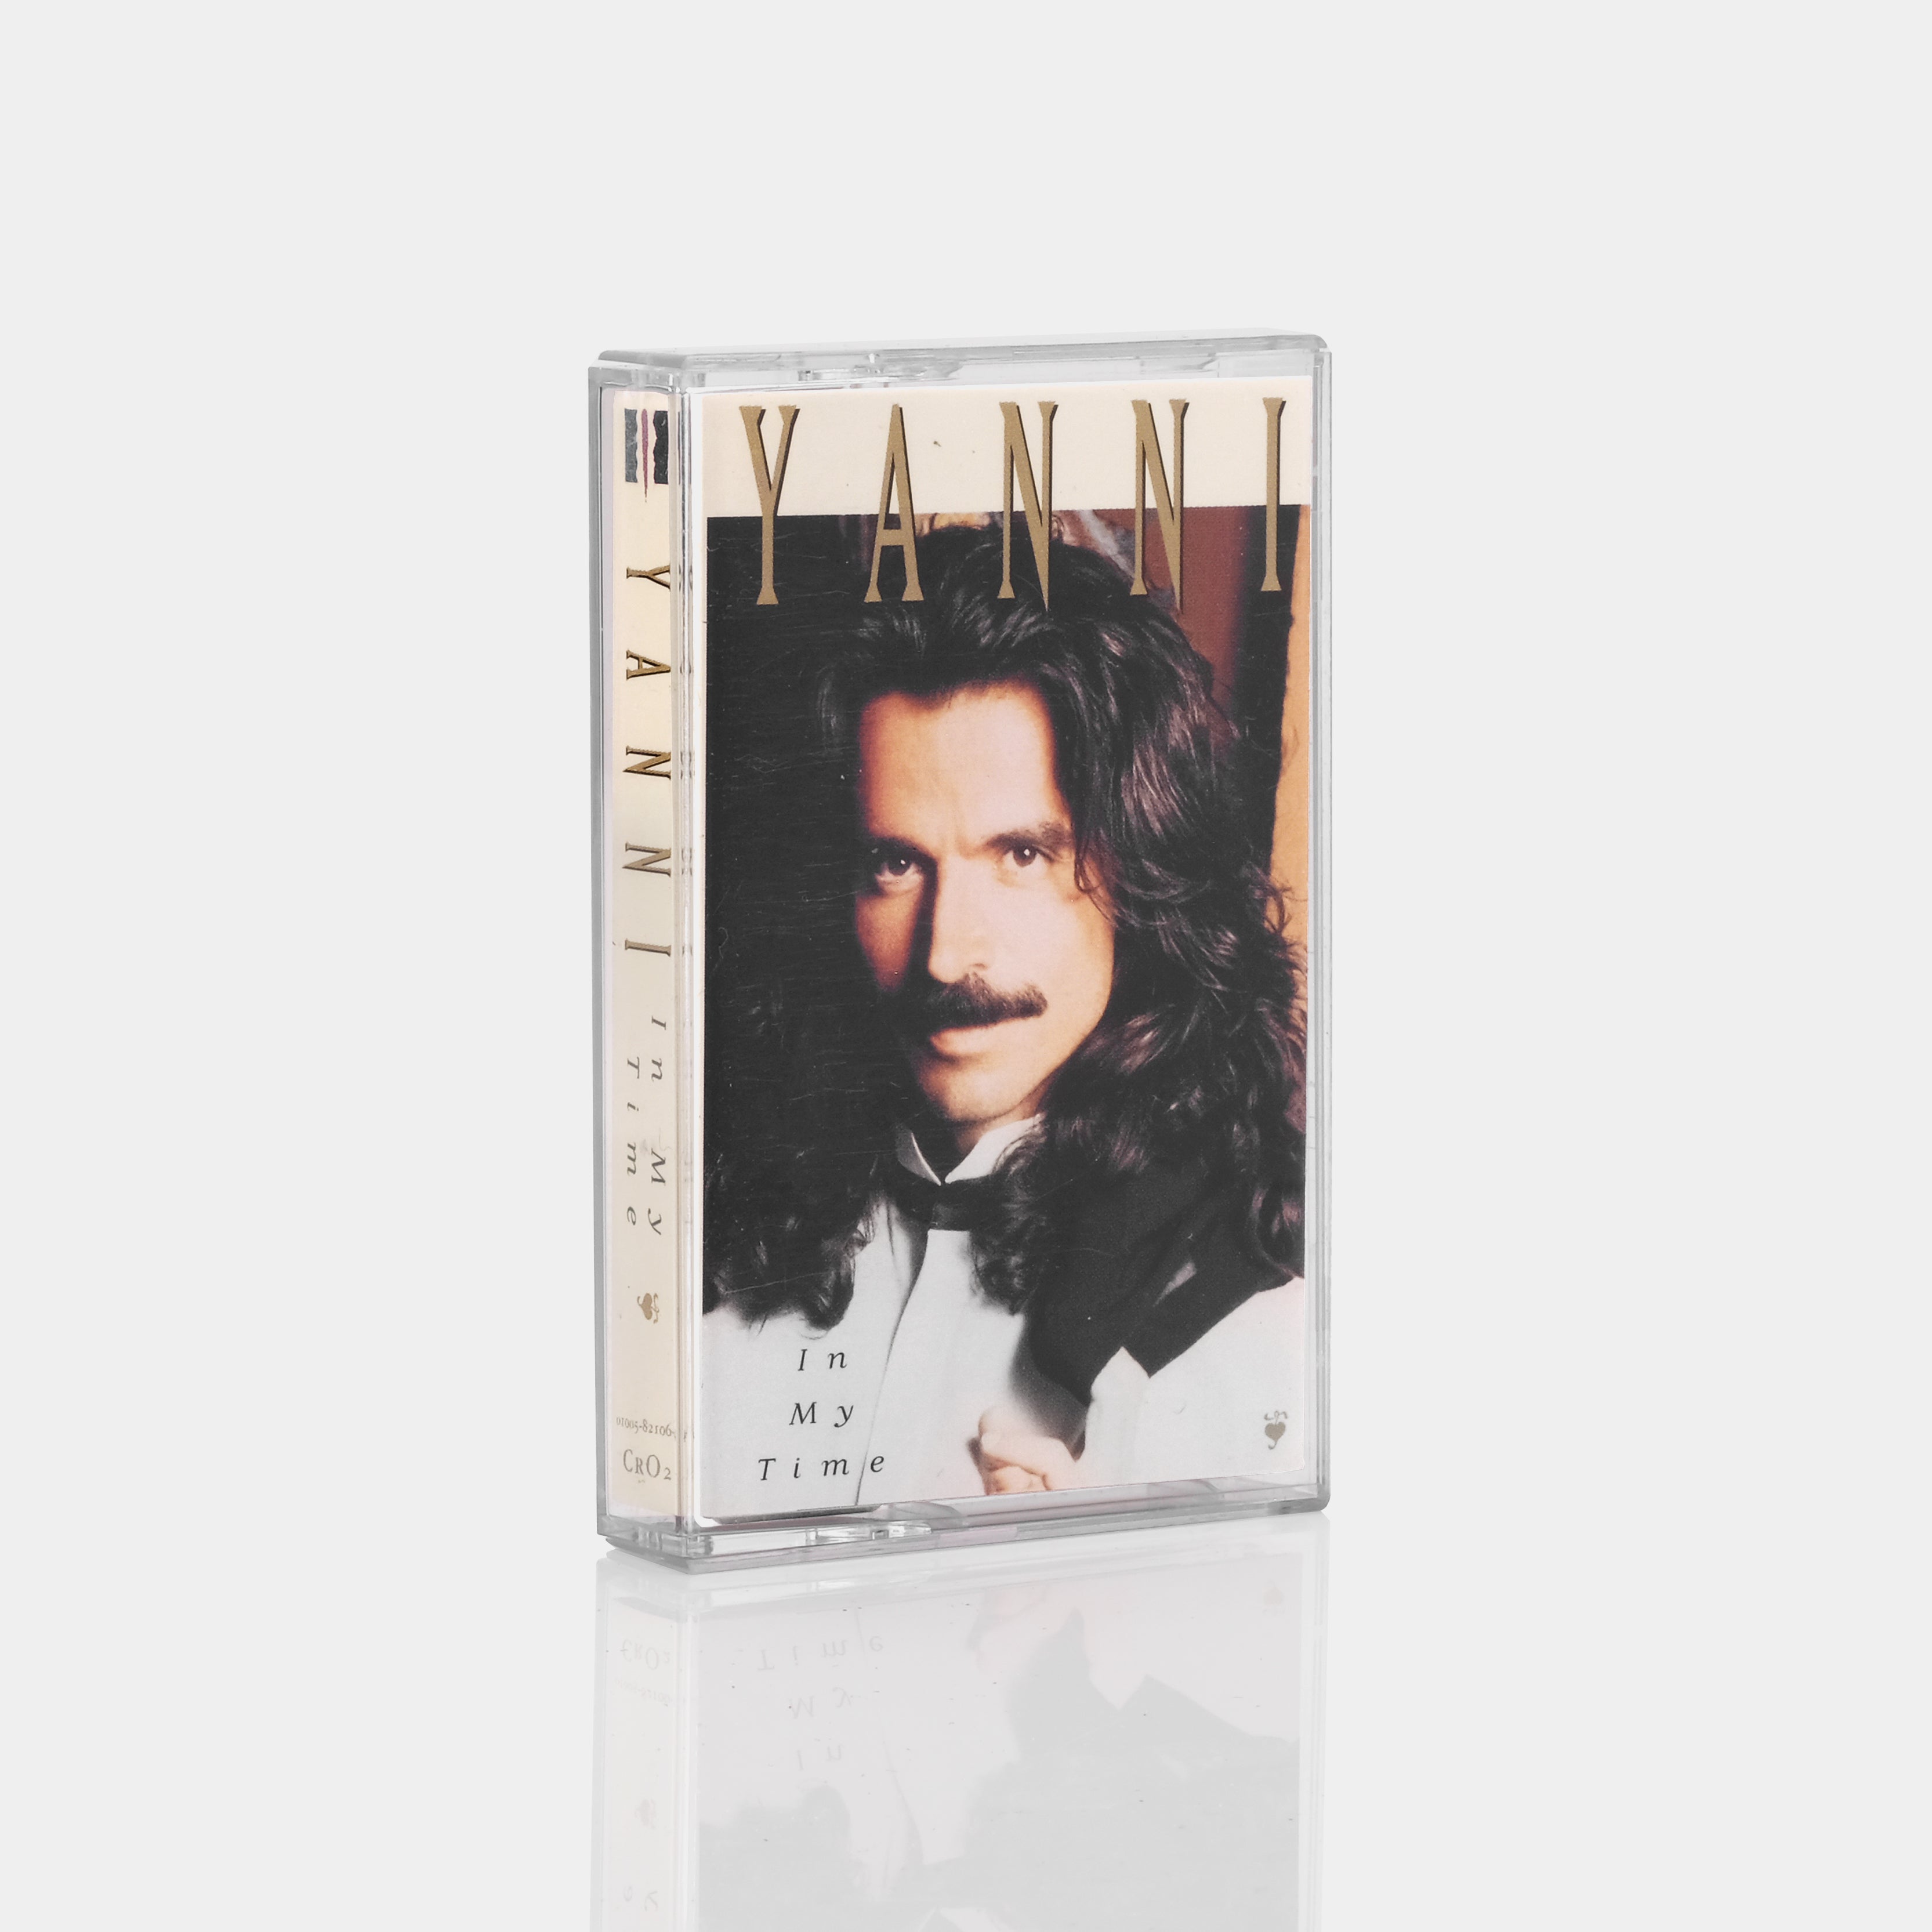 Yanni - In My Time Cassette Tape